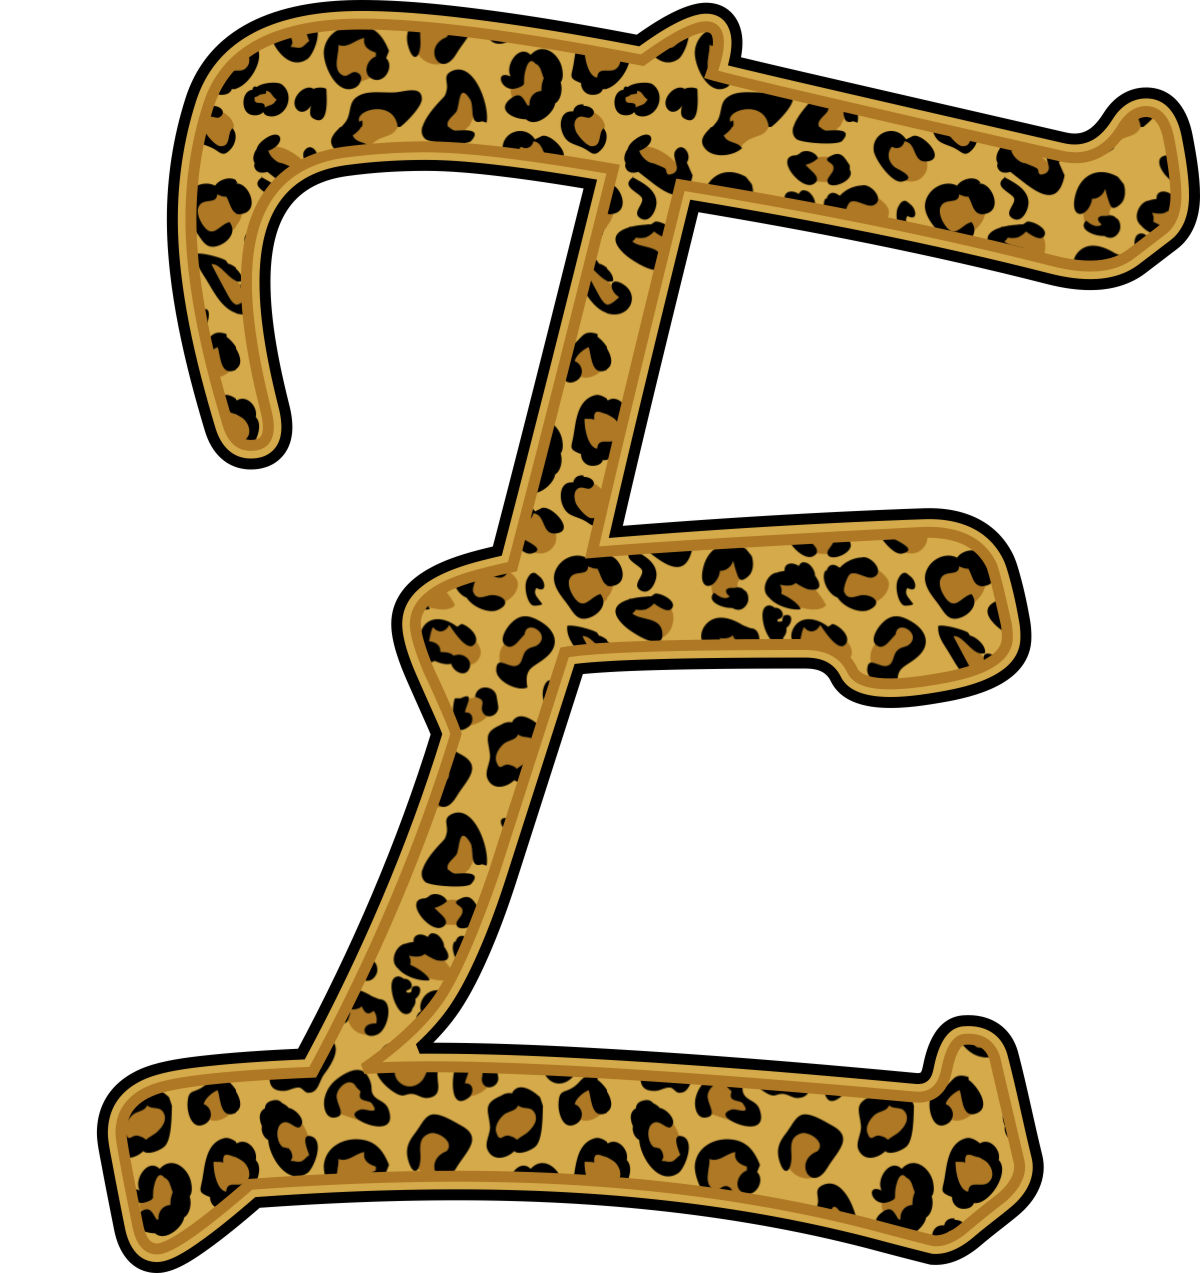 8 Best Images of Cheetah Printable Alphabet Letters - Leopard ...